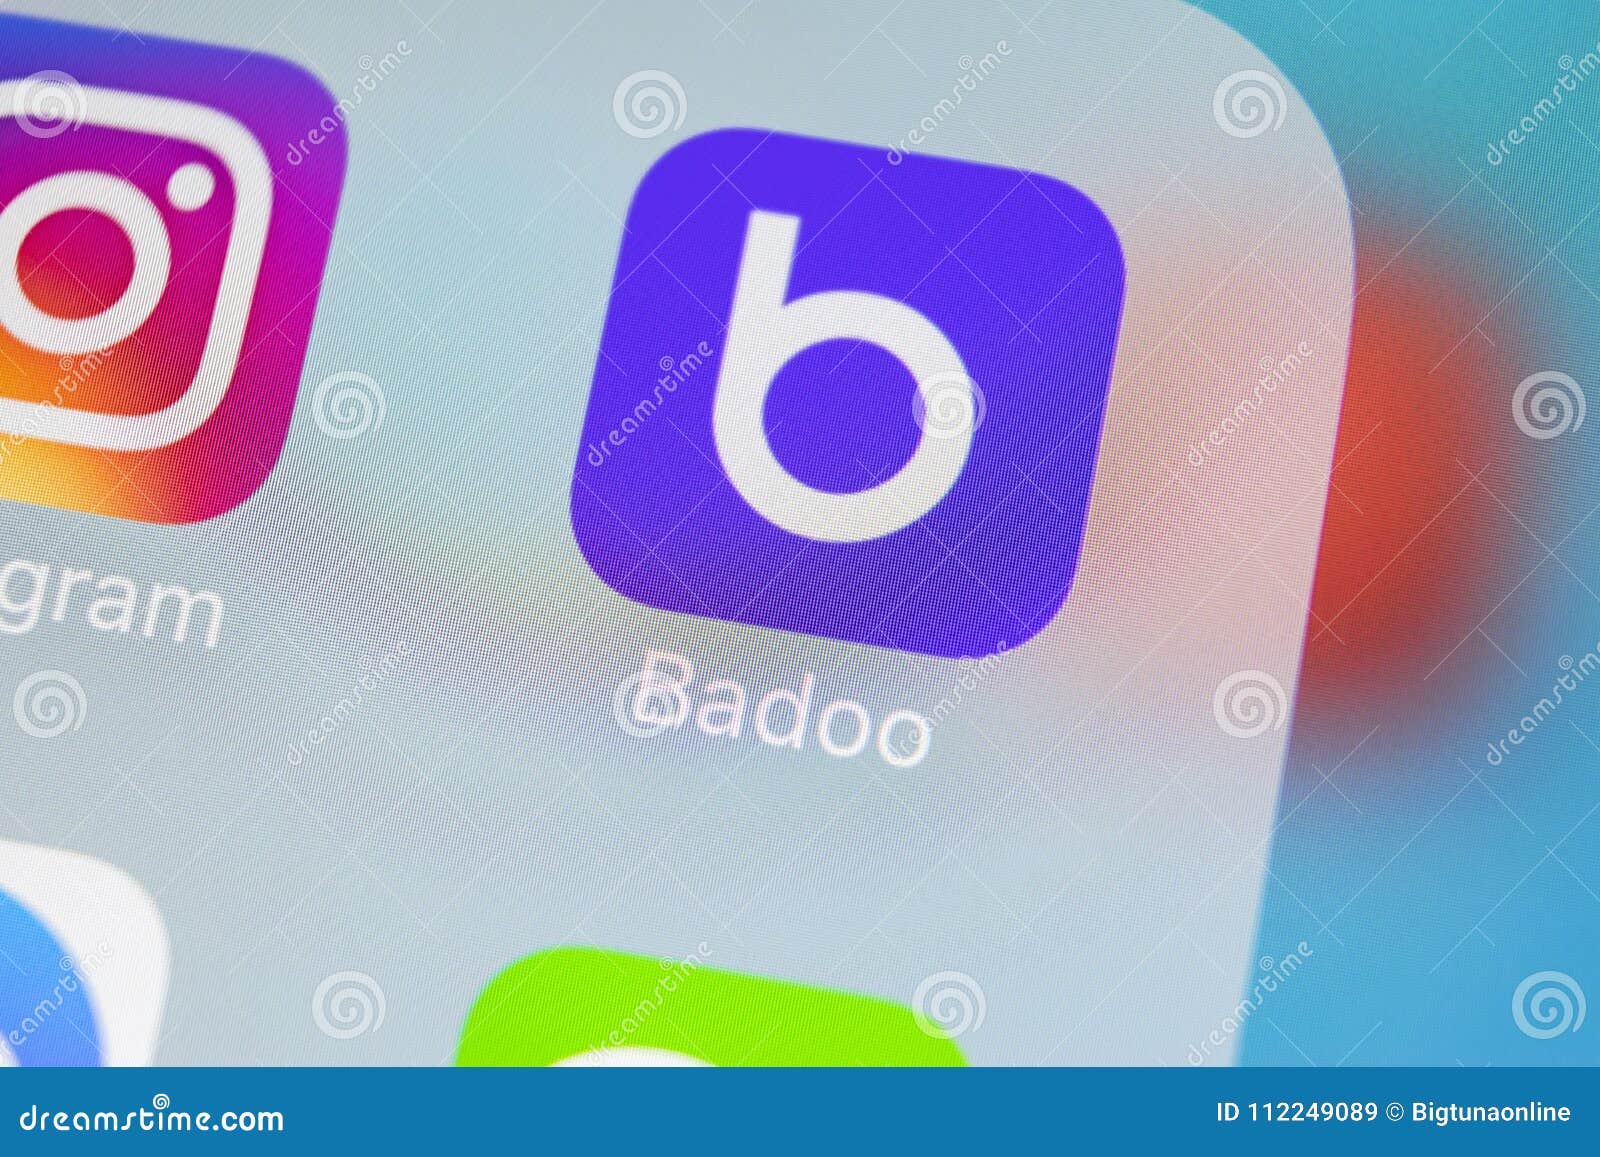 In sign badoo online Badoo Chat